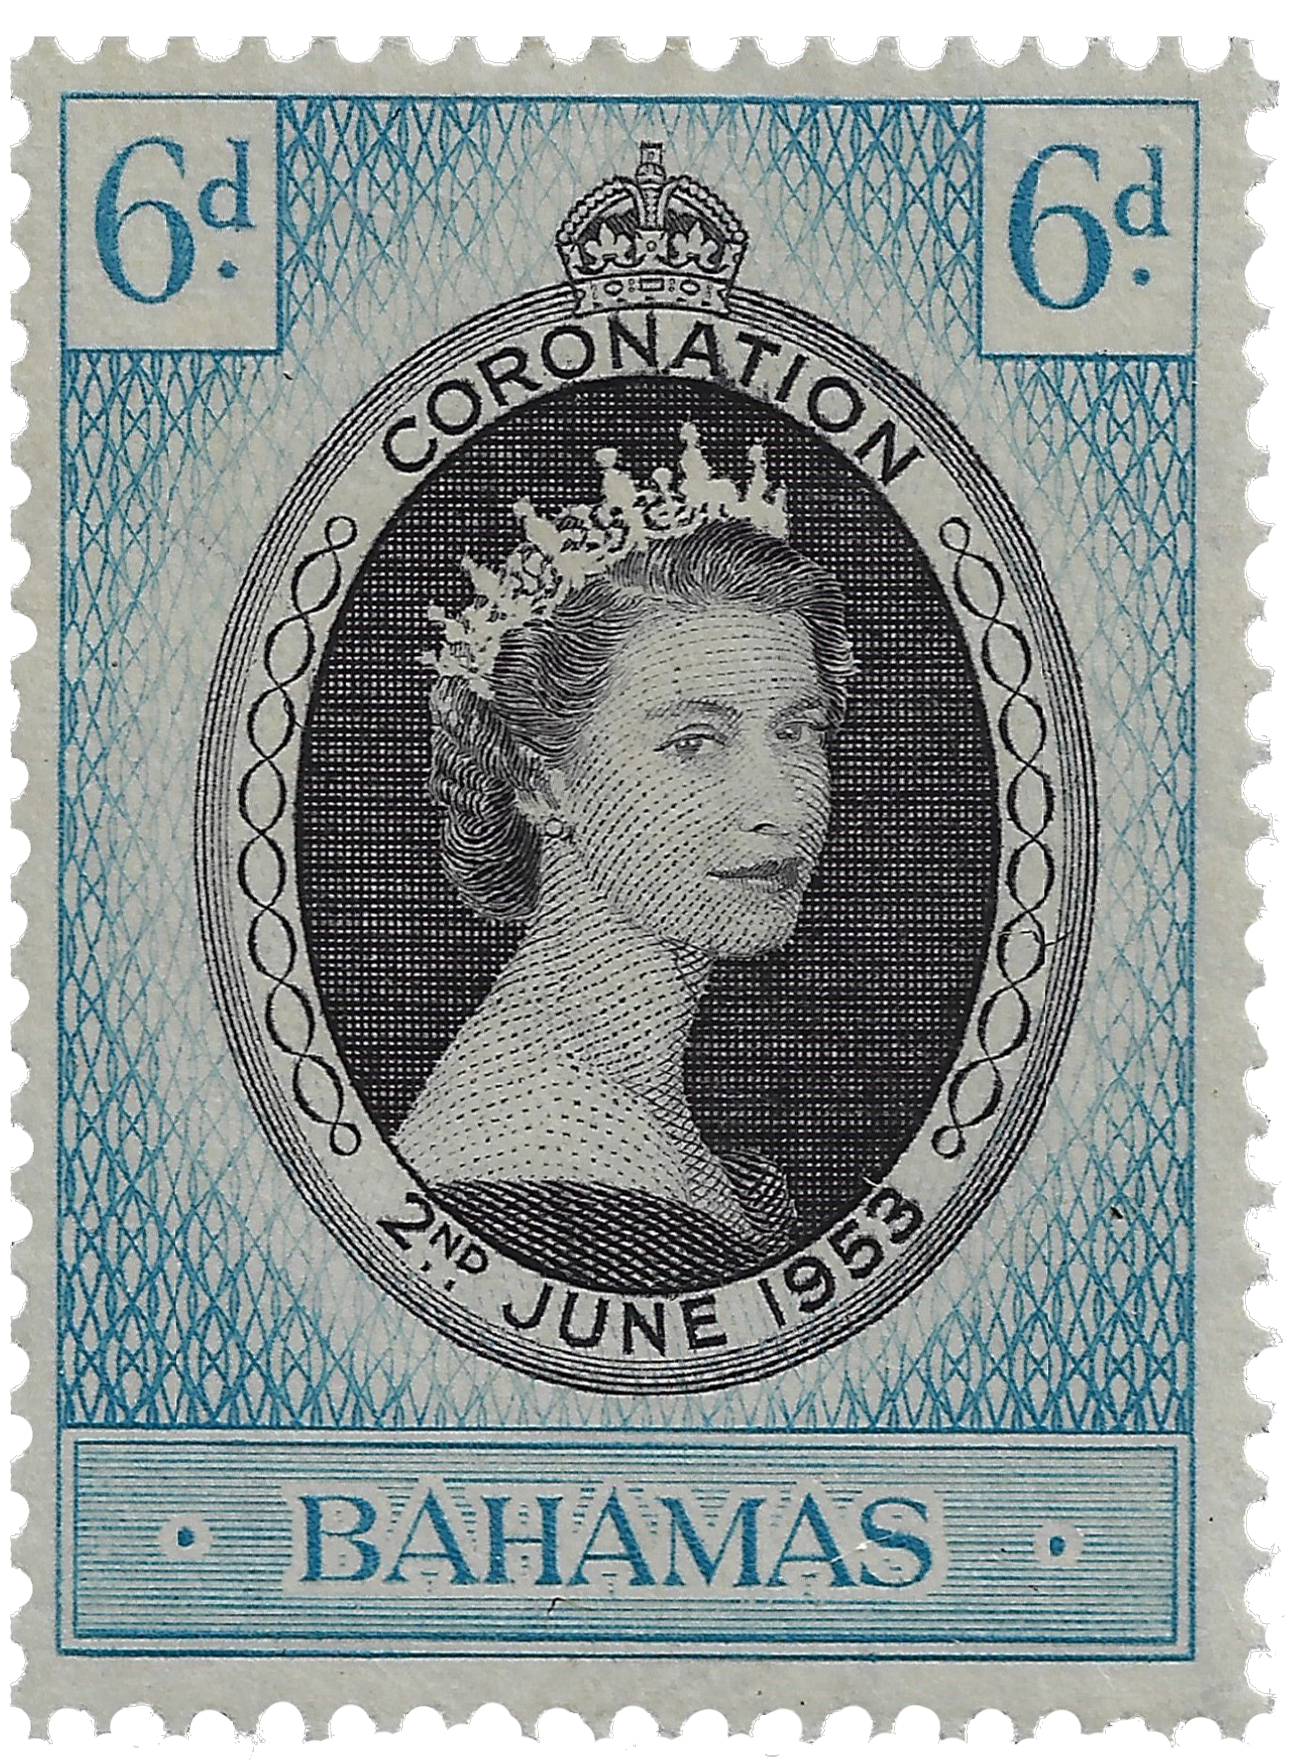 6d 1953, Coronation, 2nd June 1953